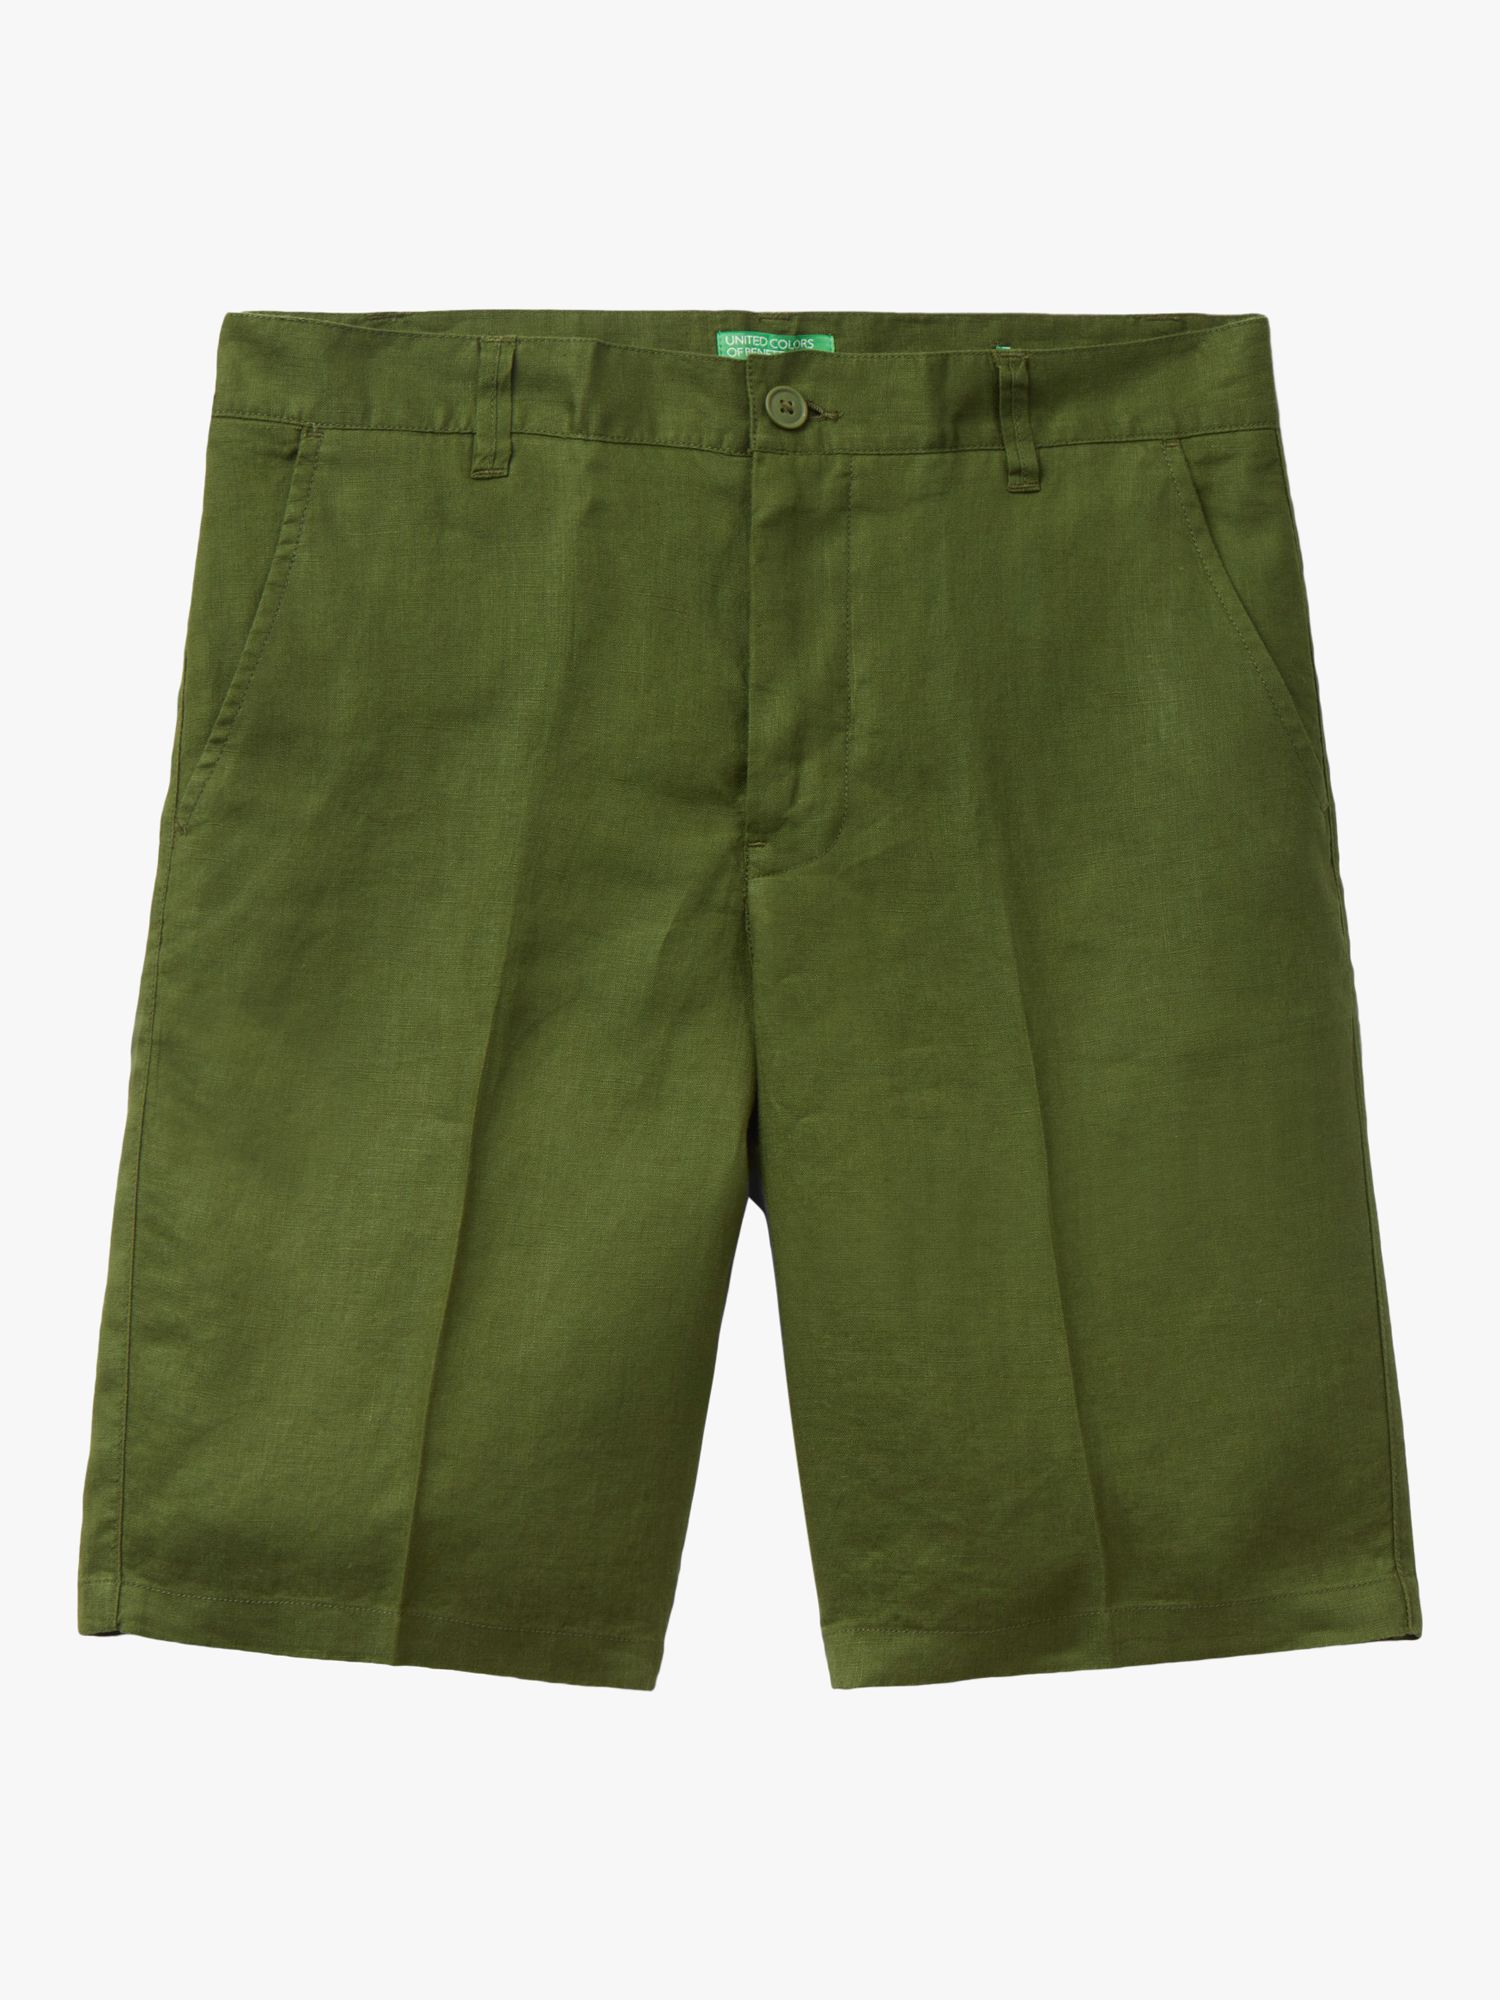 Benetton Linen Shorts, Olive Green, 30R